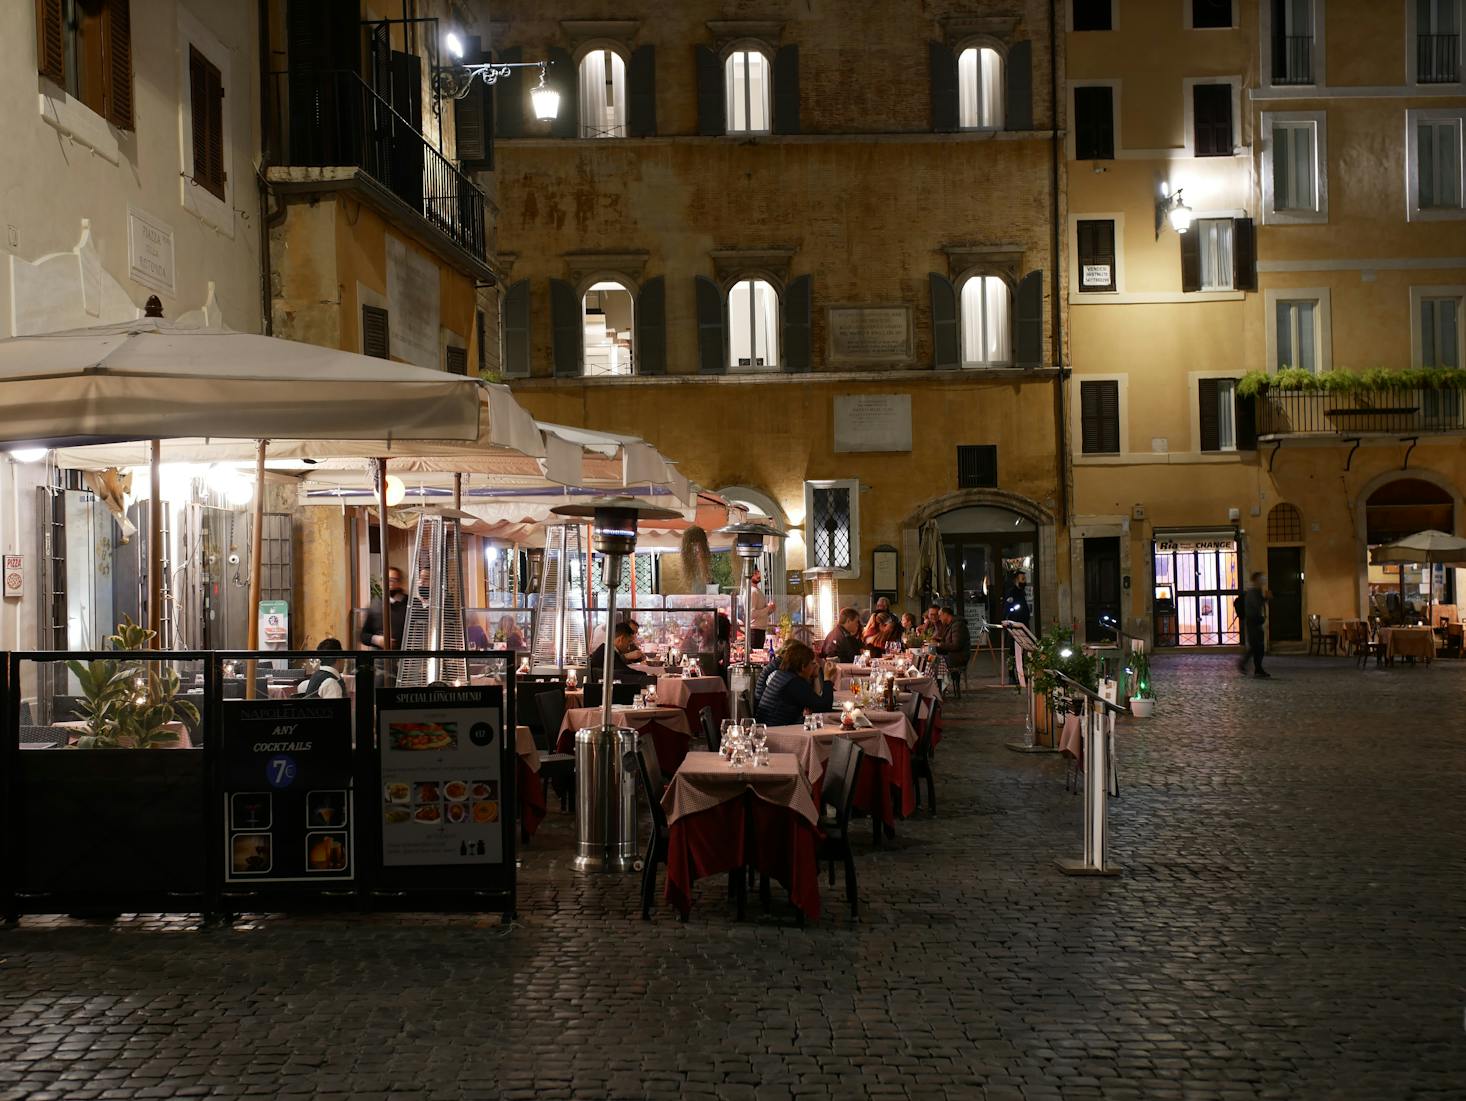 Cheap bars in Rome